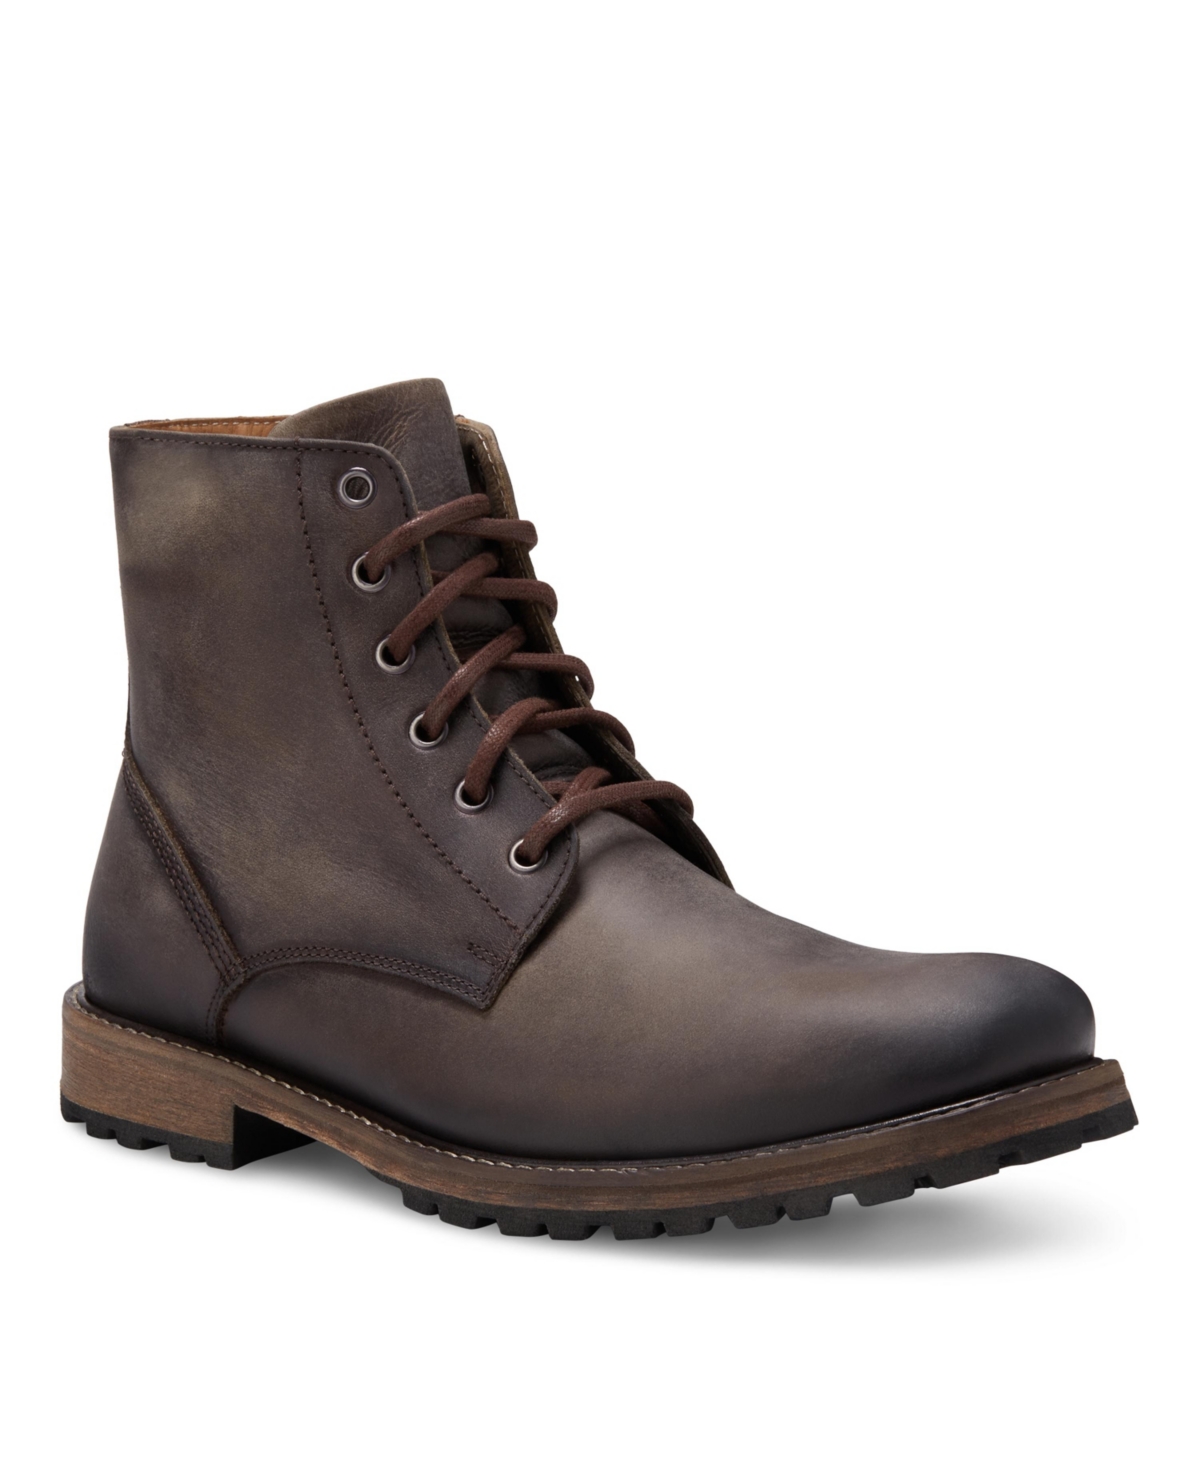 Men's Hoyt Zipper Plain Toe Boots - Brown